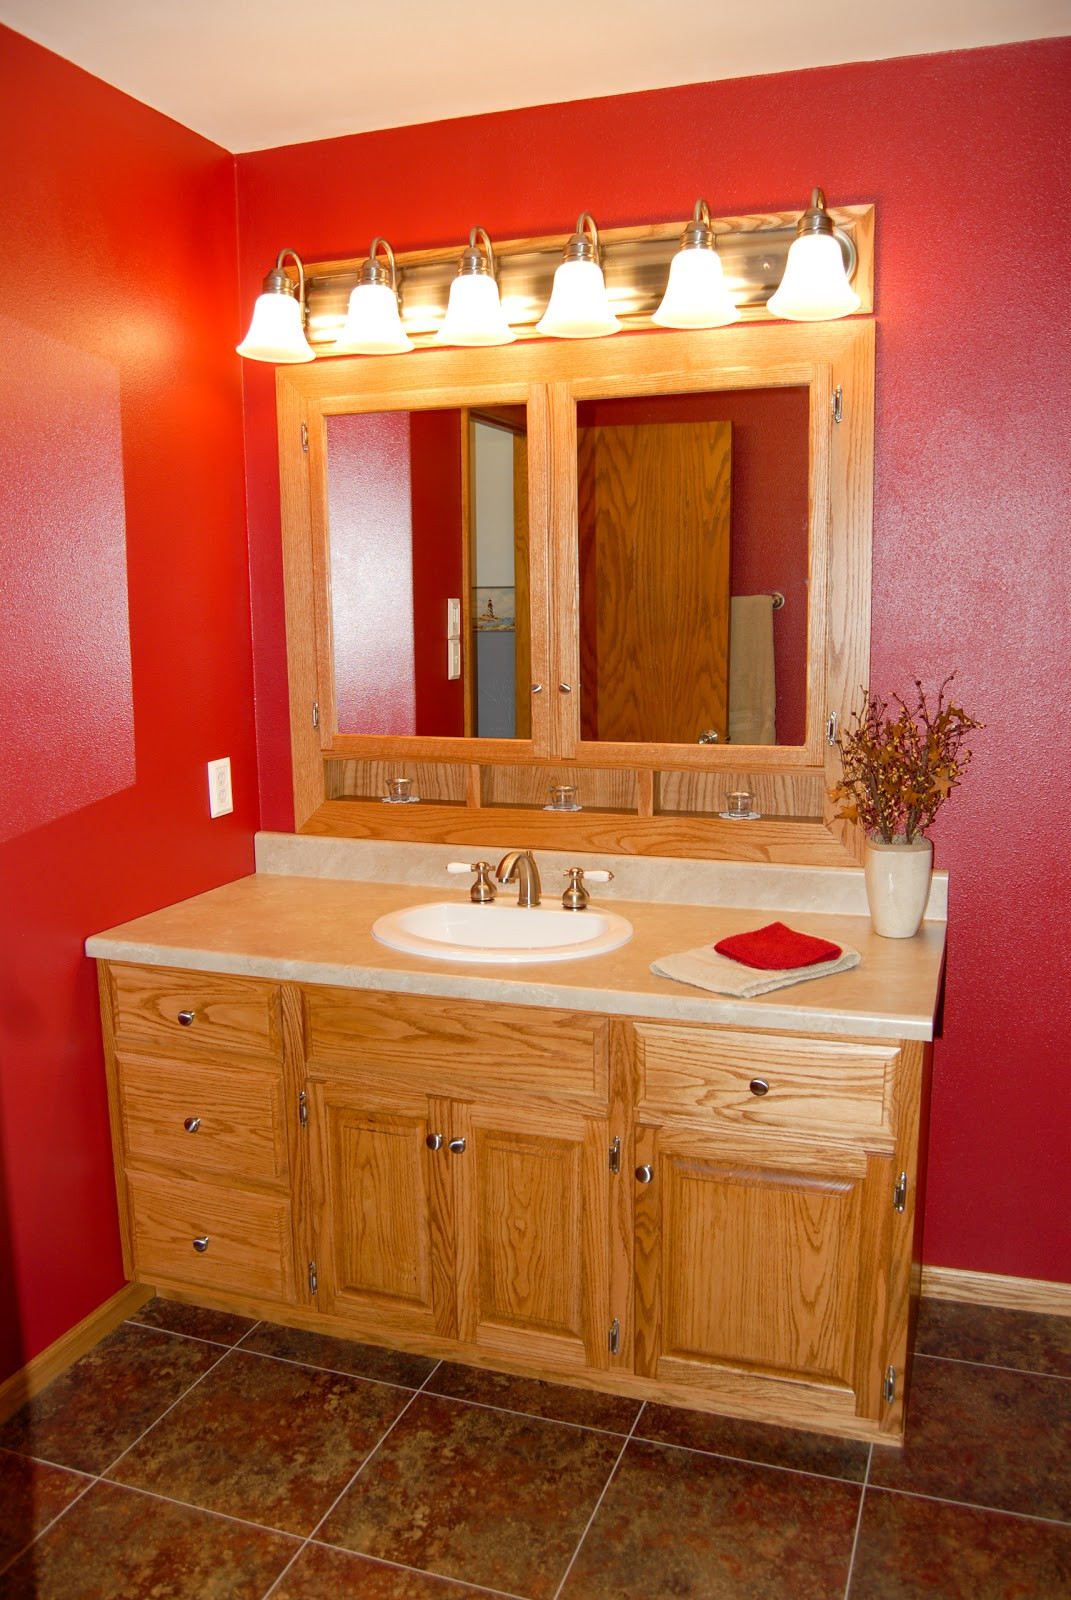 Custom Built Bathroom Vanity
 50 Great Oak Bathroom Vanities And Cabinets